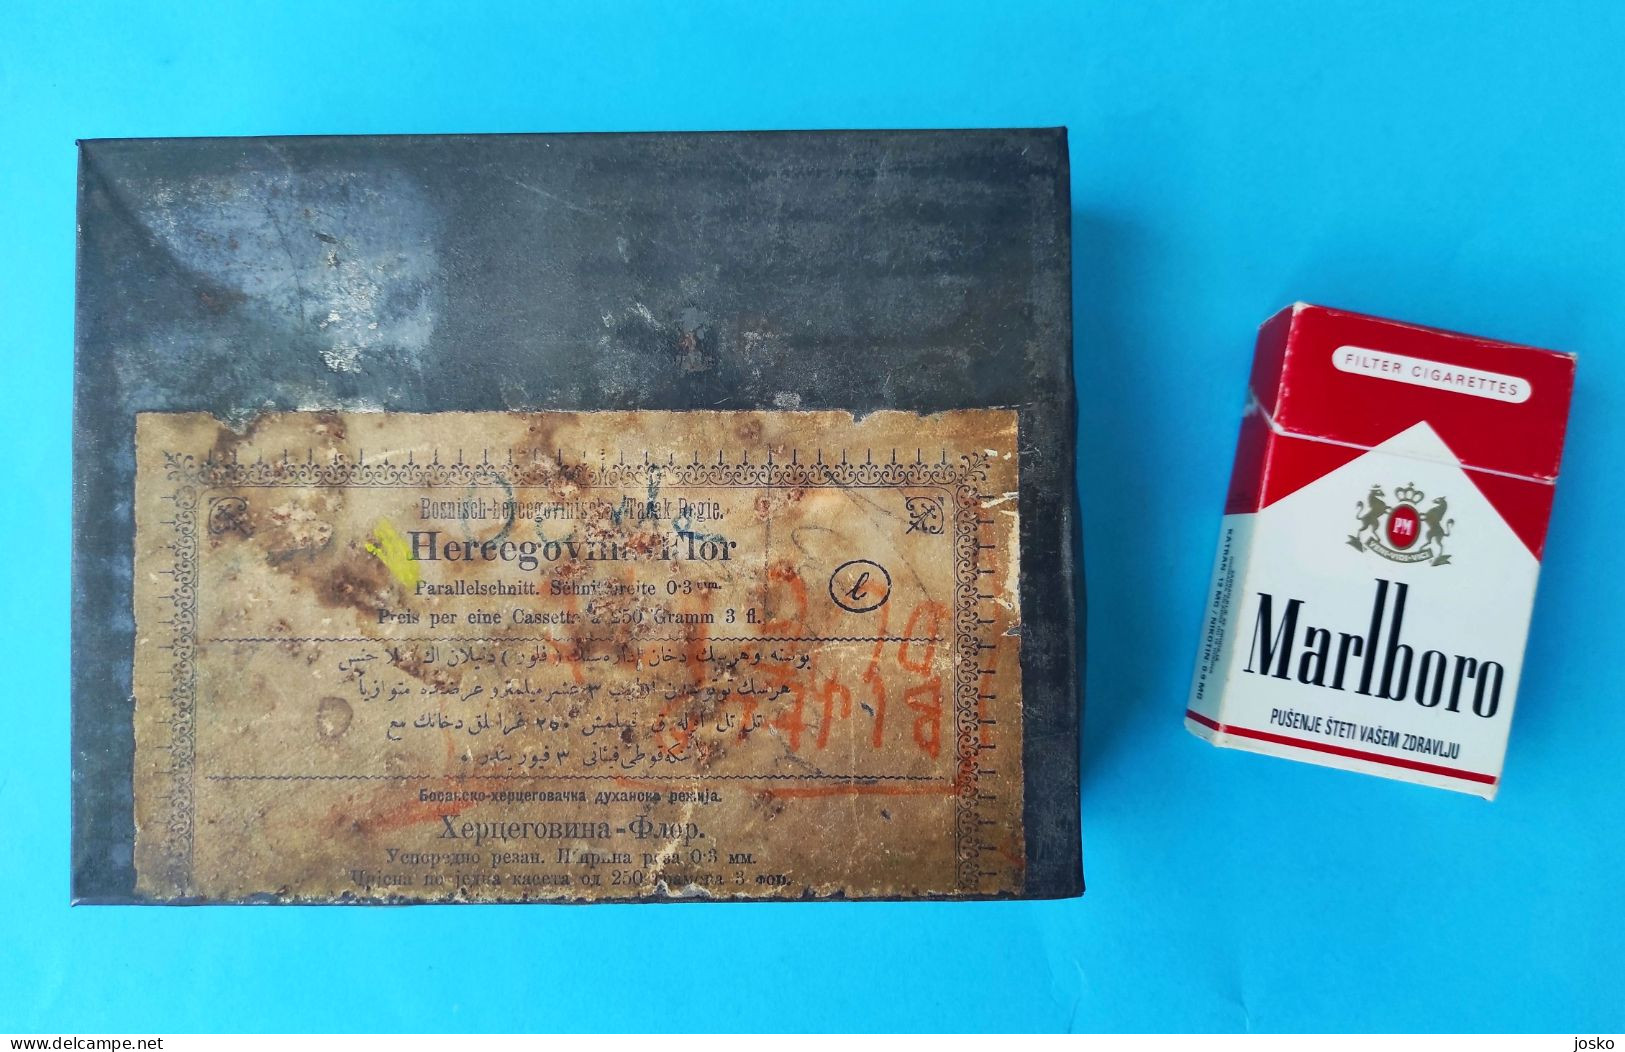 HERCEGOVINA FLOR - Bosnia And Herzegovina Antique Tobacco Tin Box (1883.y.) * Tabak Tabac Tabacco Tabaco Cigarettes - Empty Tobacco Boxes